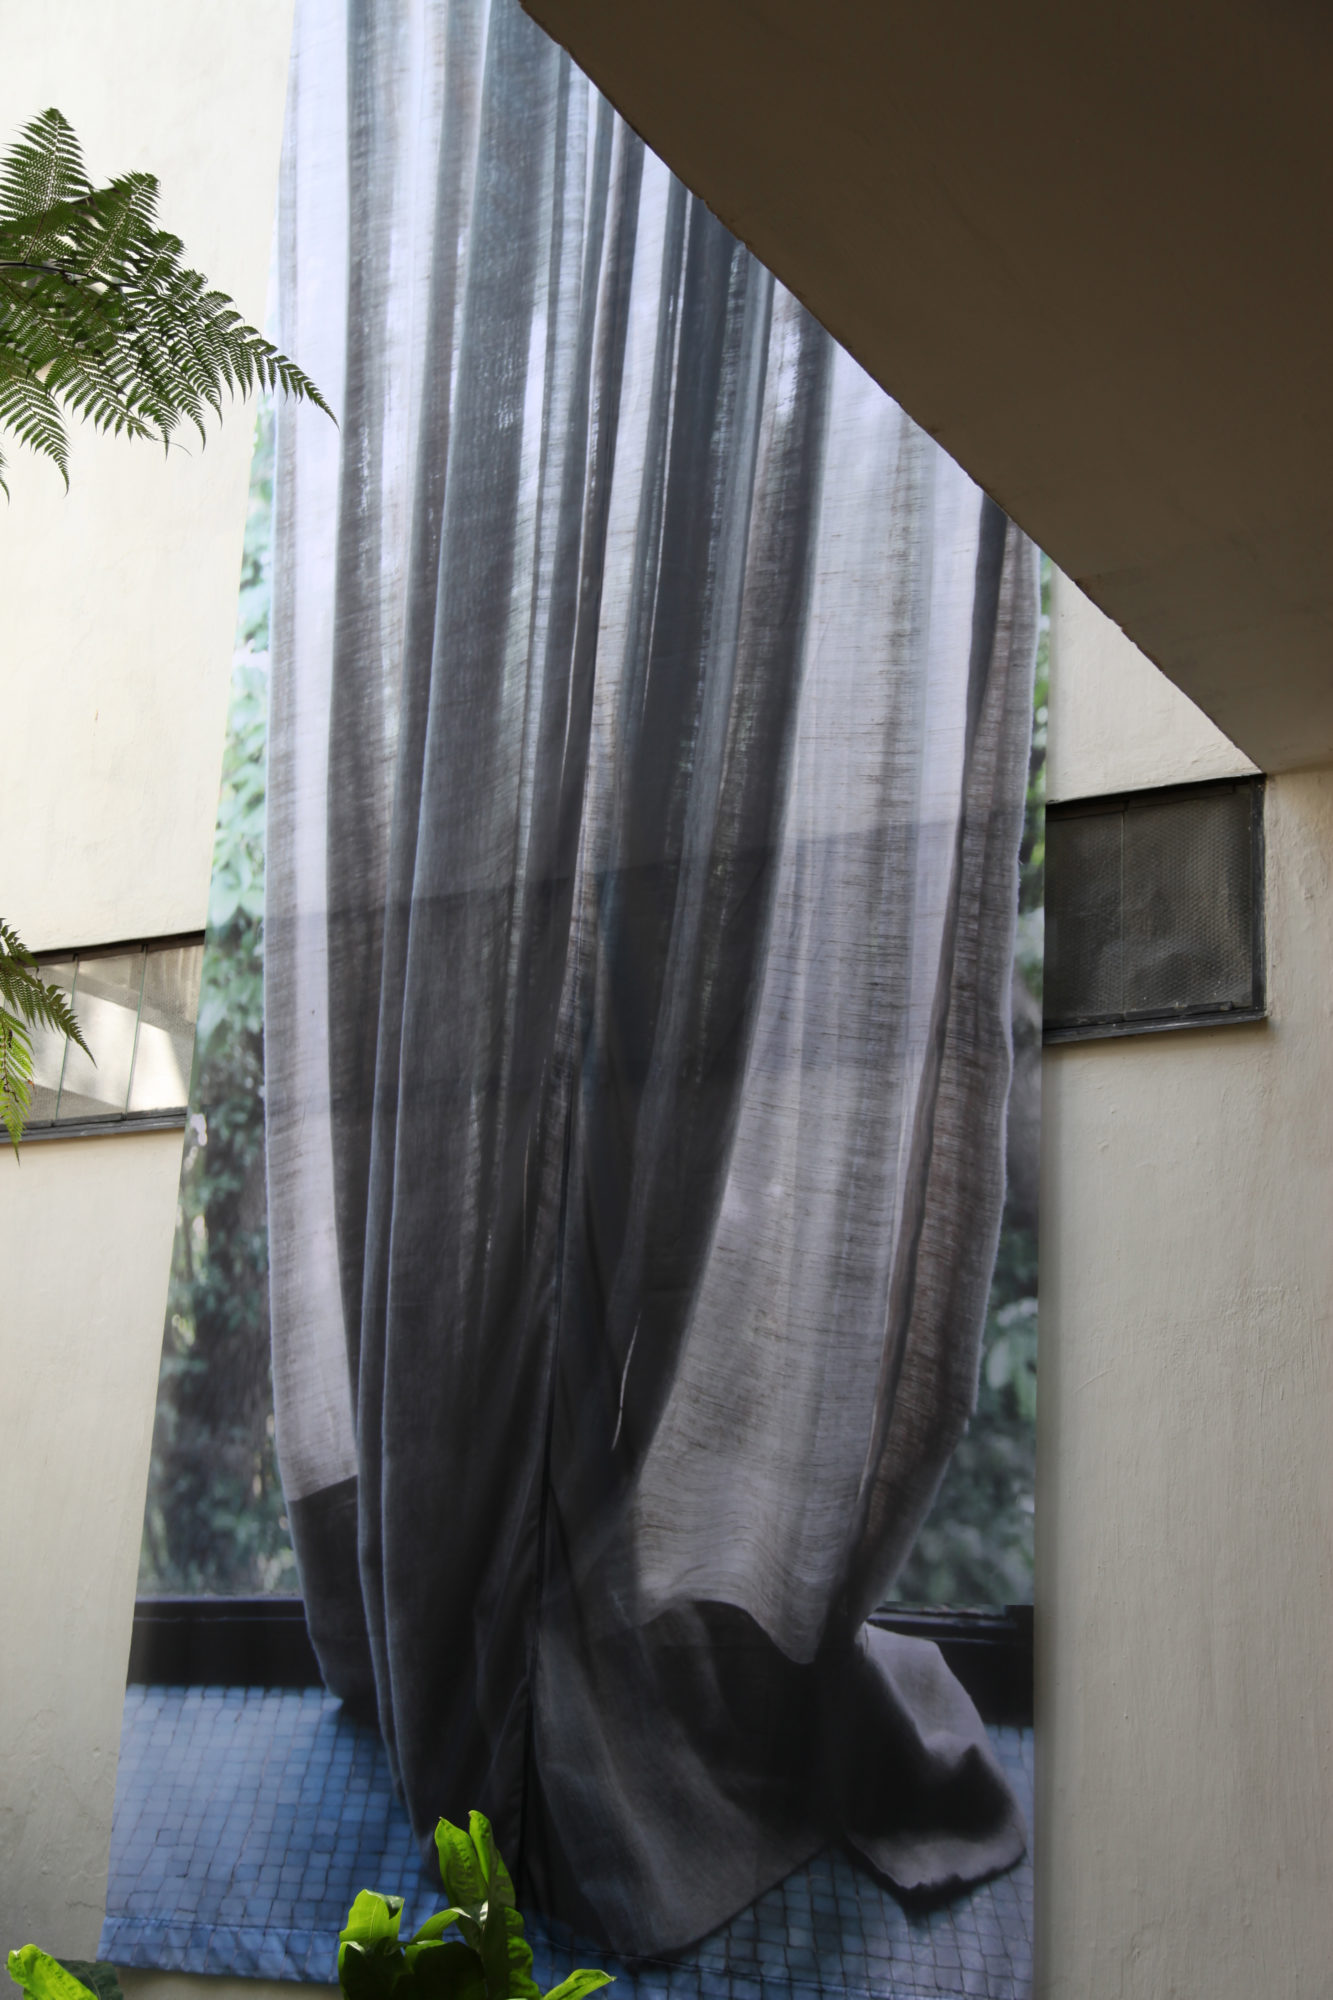 An installation view of Veronika Kellndorfer's Curtain courtyard and reflection, 2016.